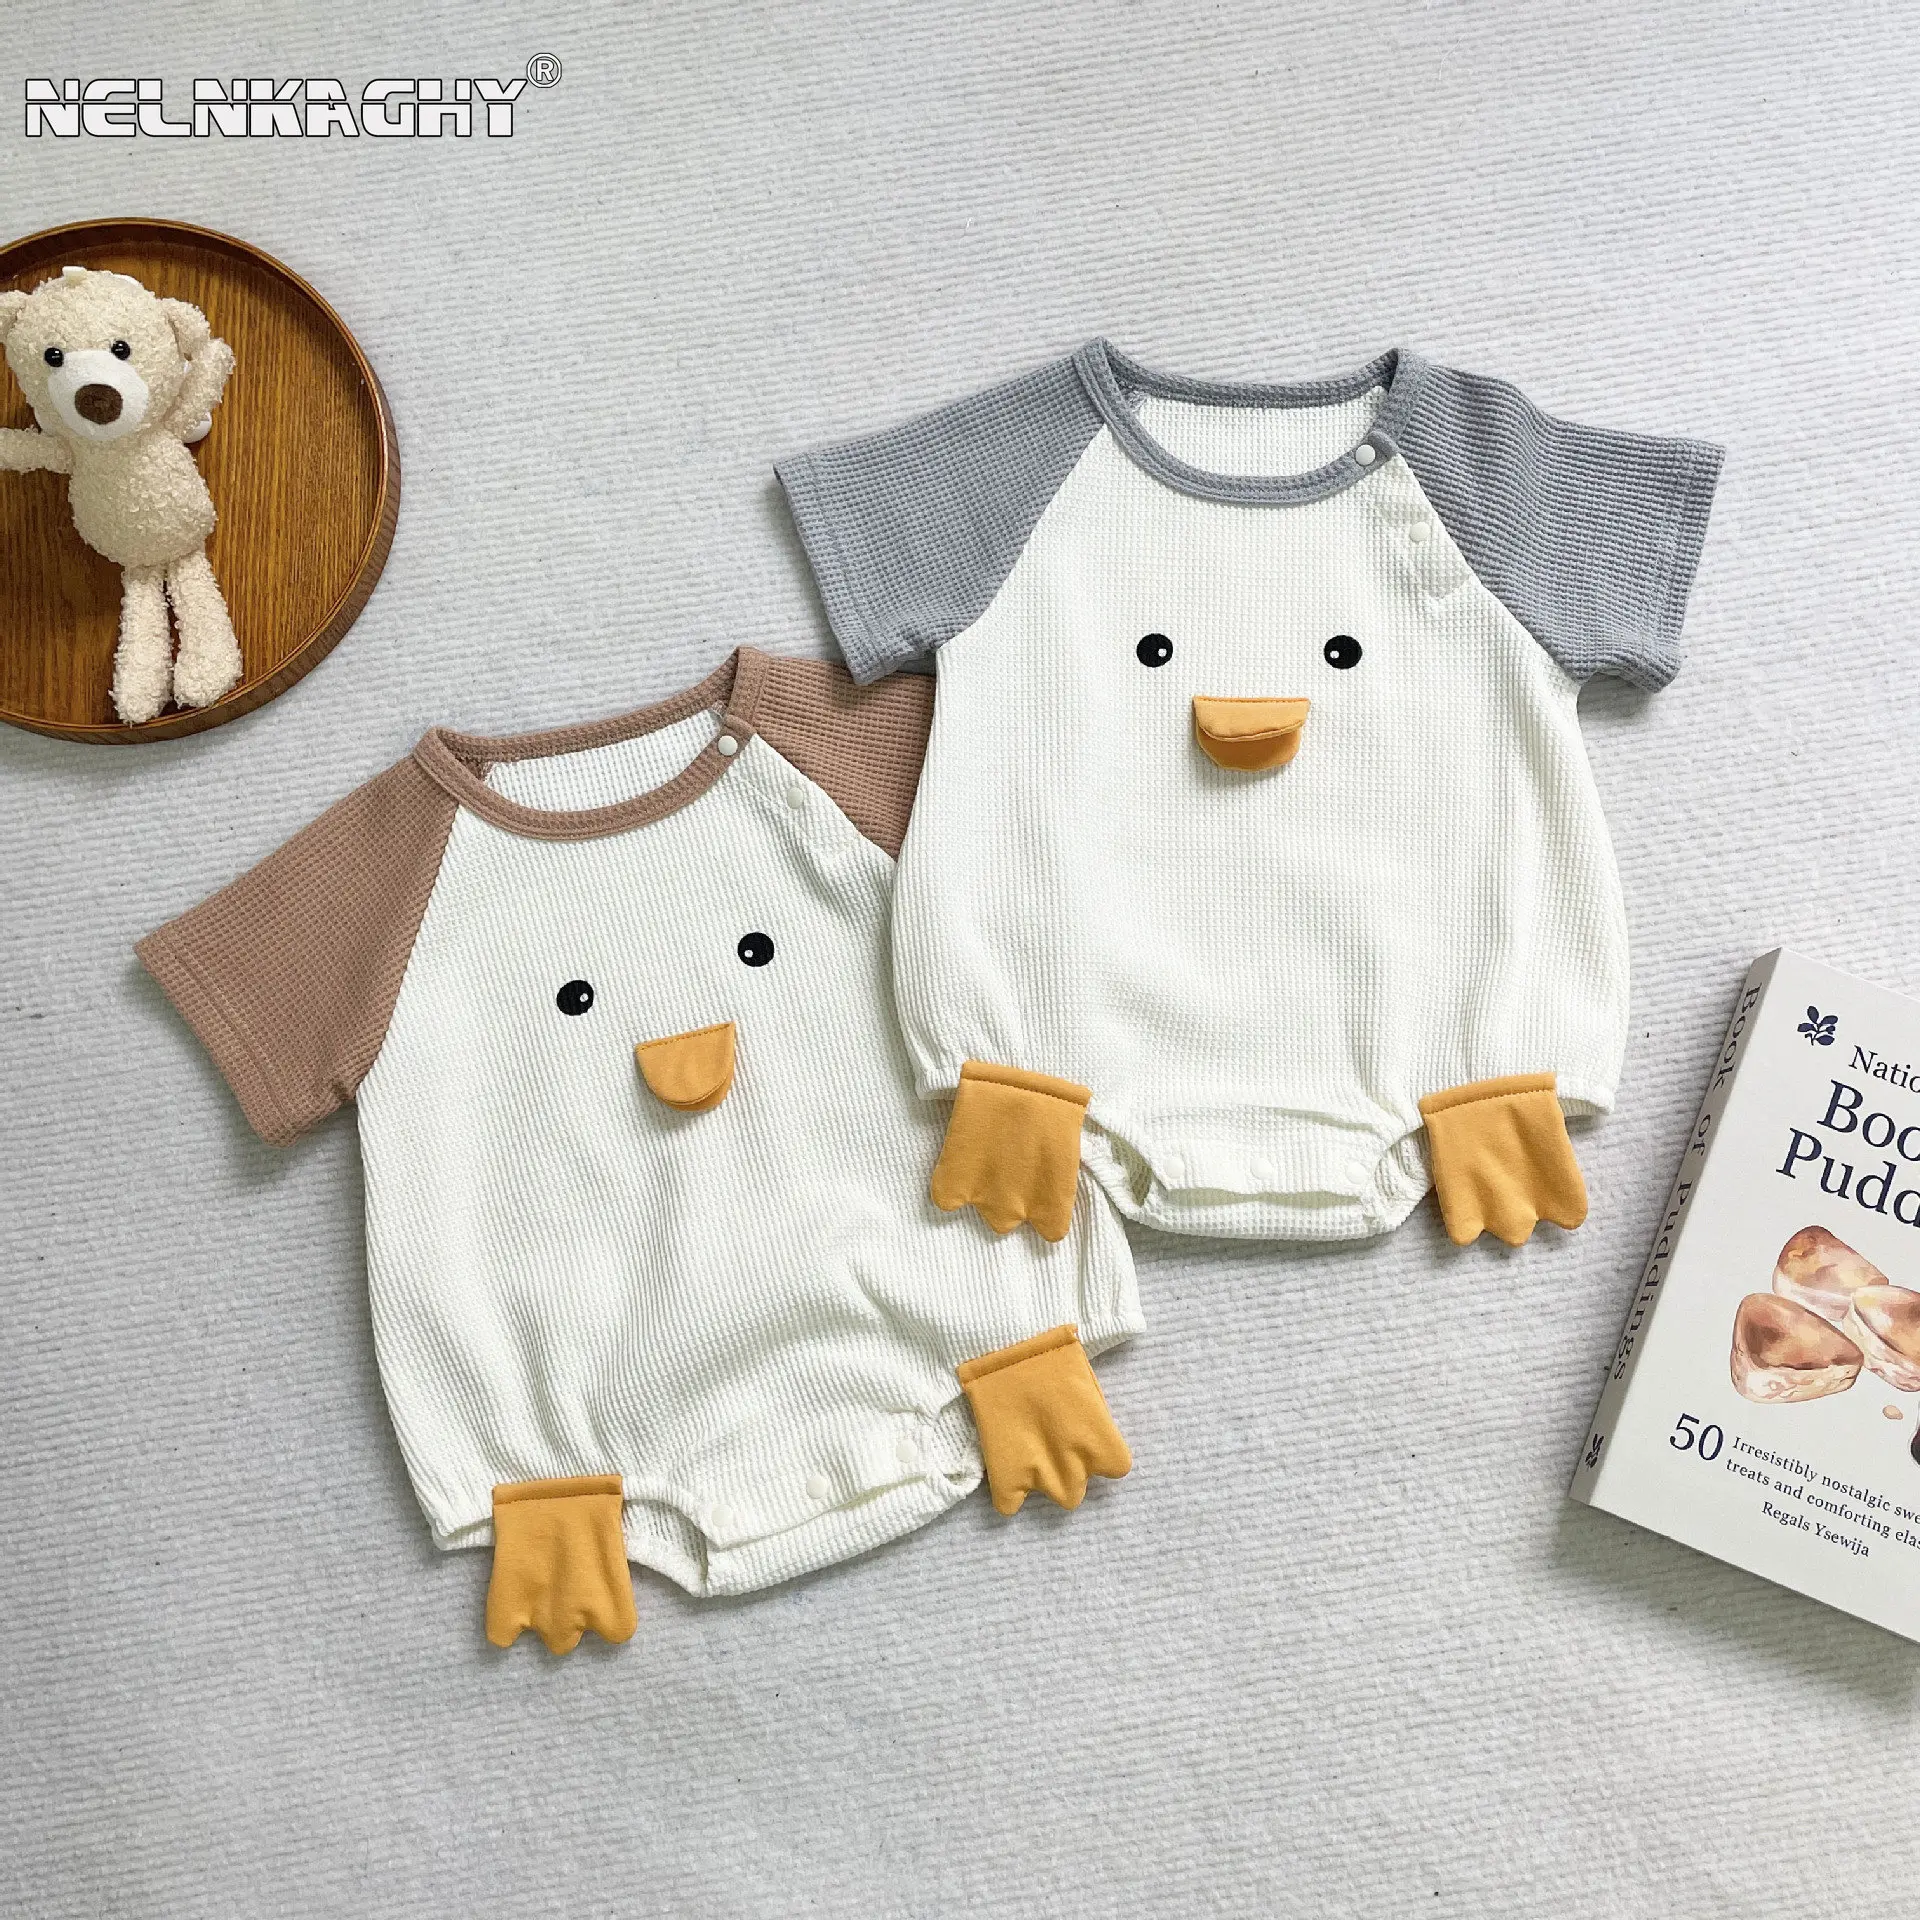 

Newborns Infants Cute Short Sleeve Cartoon Overalls - Perfect Summer Bodysuits for Kids Baby Boys Girls 0-24 Months